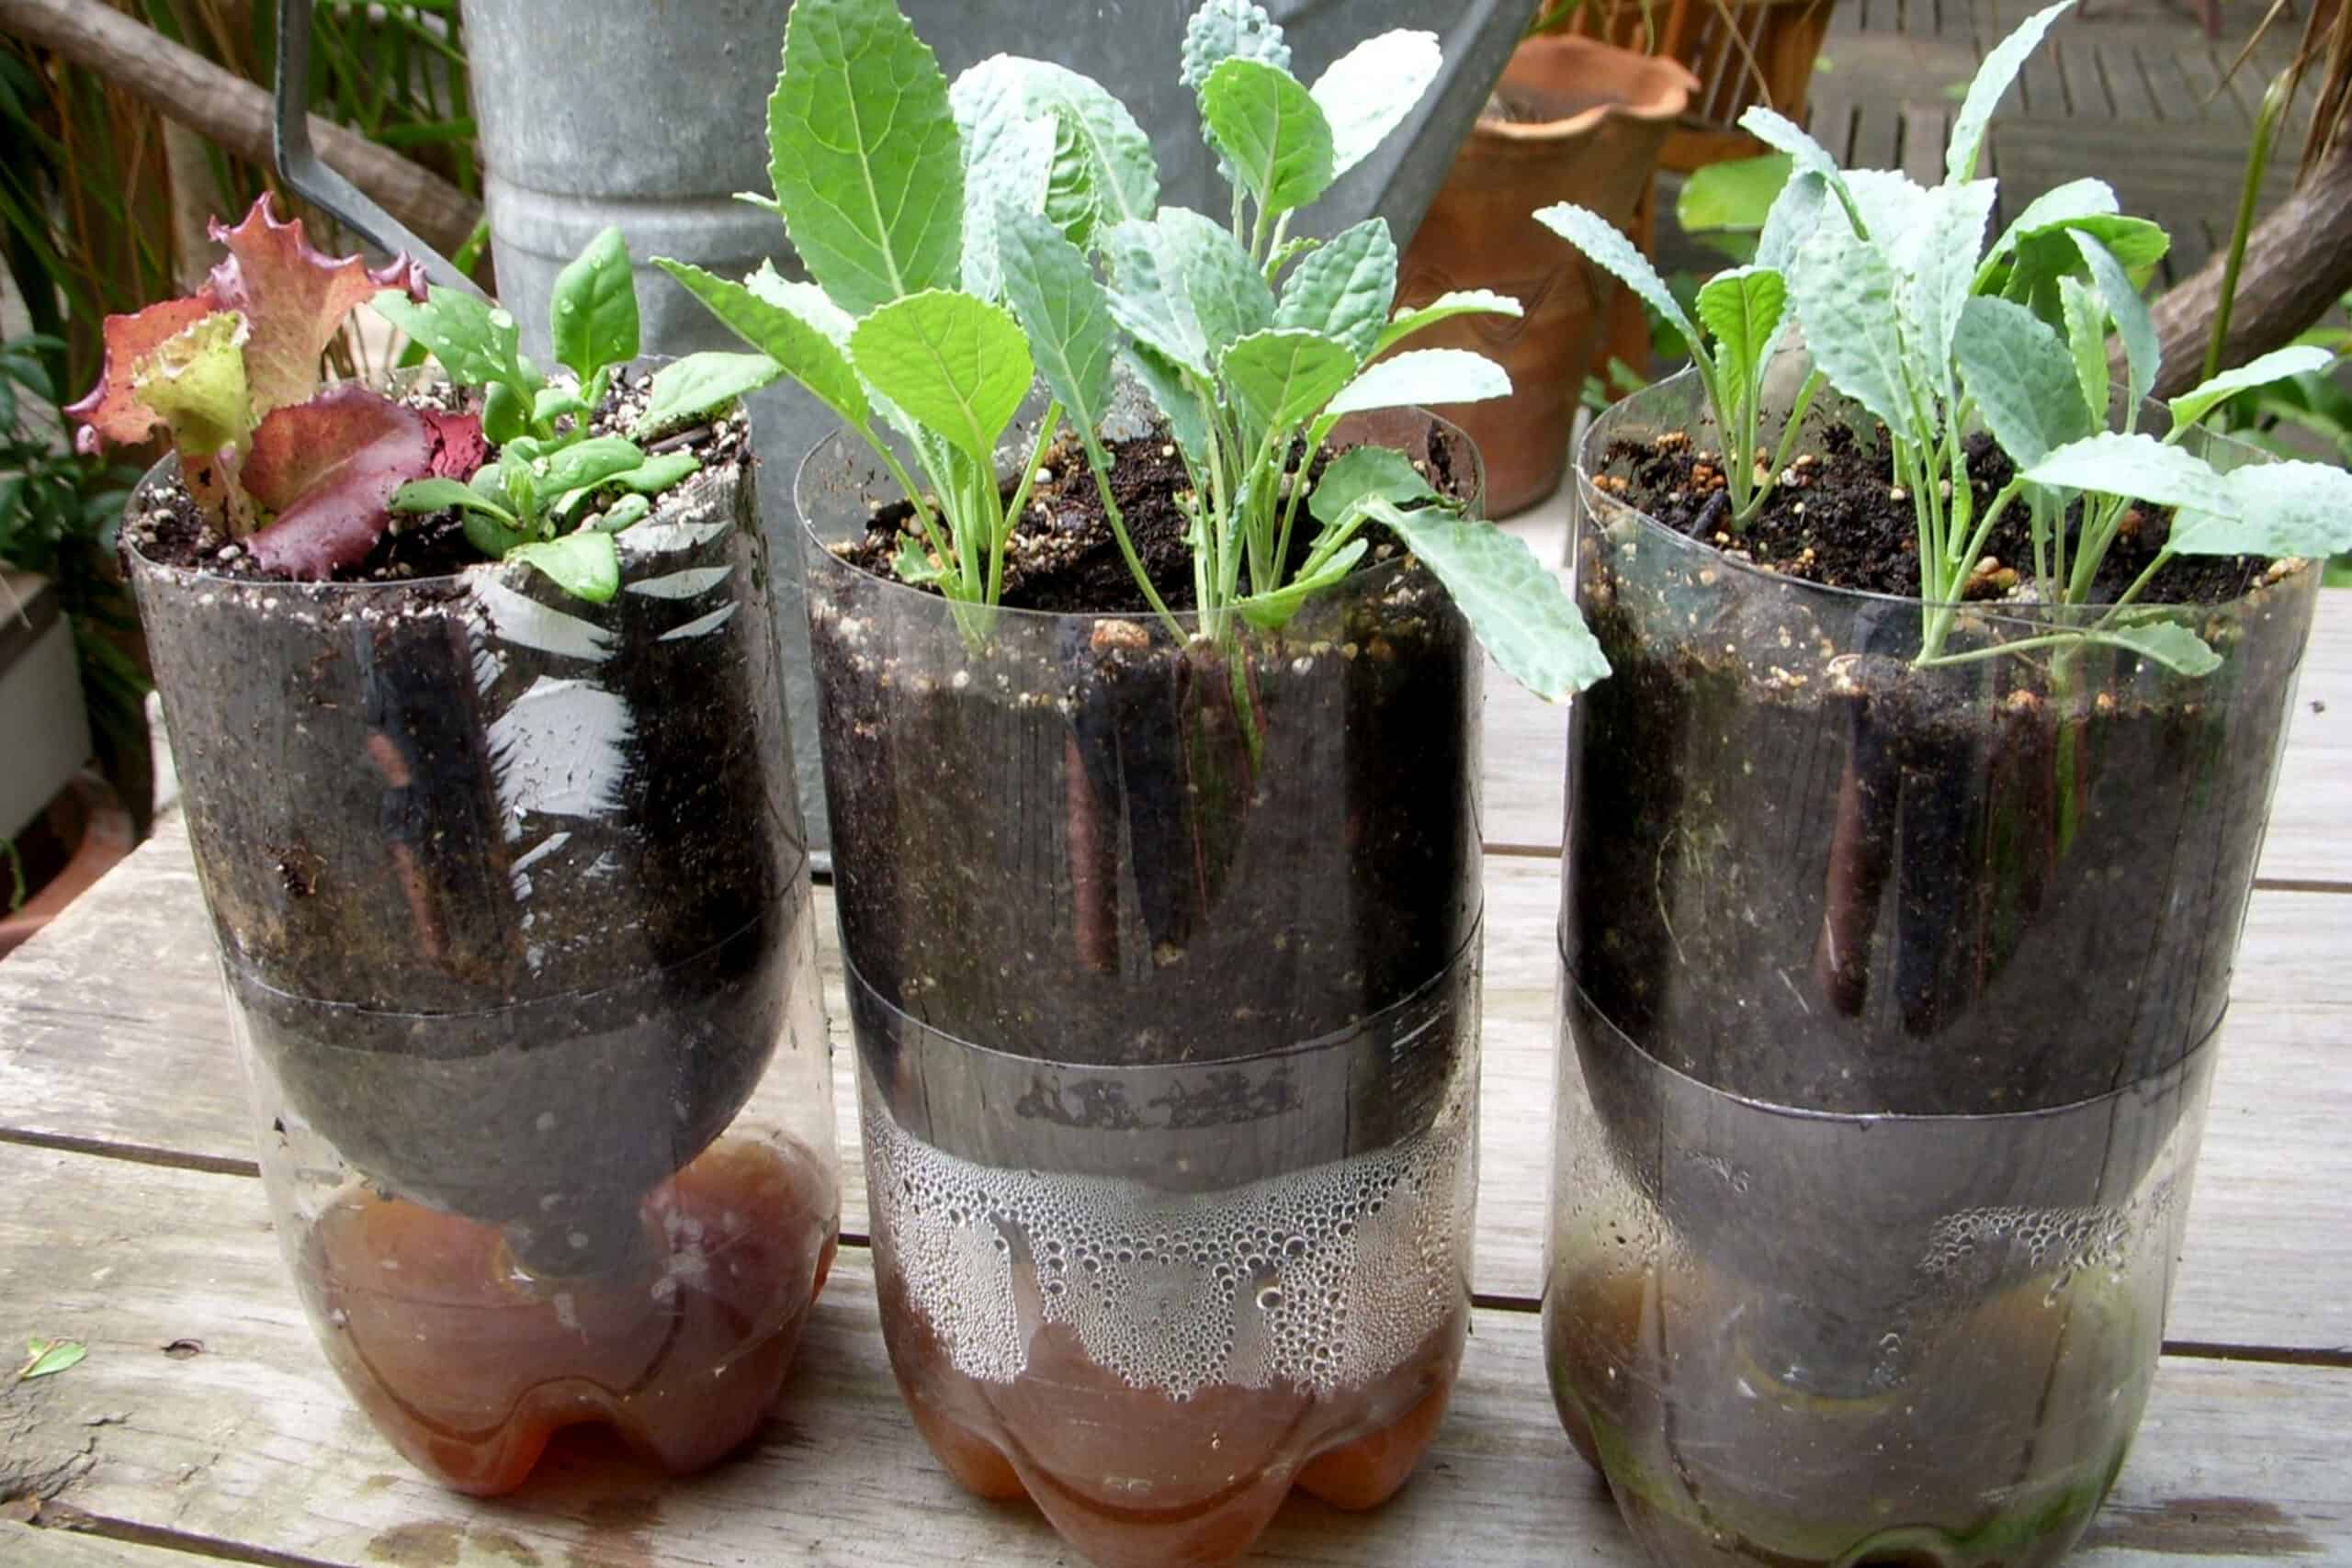 Irrigating herb gardens in 2l bottles